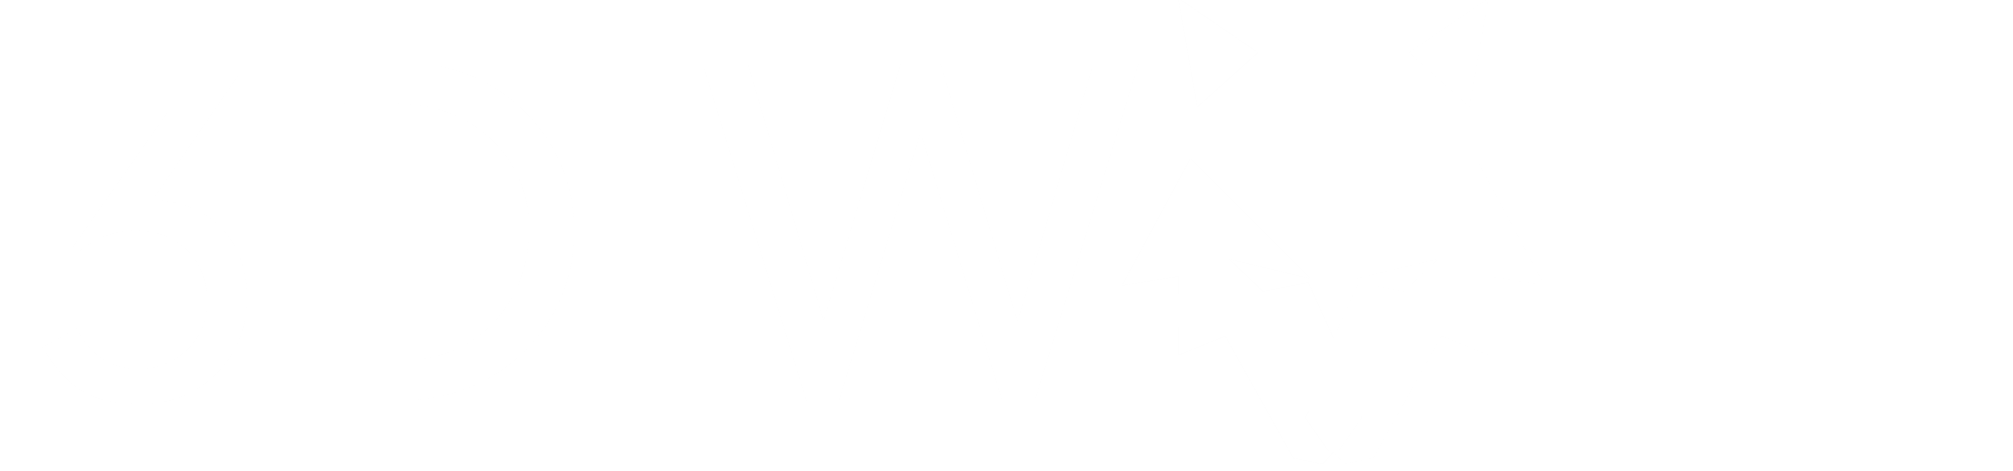 cropped-v2-3d-wolf-logo-hires_claim-white-kopie-png